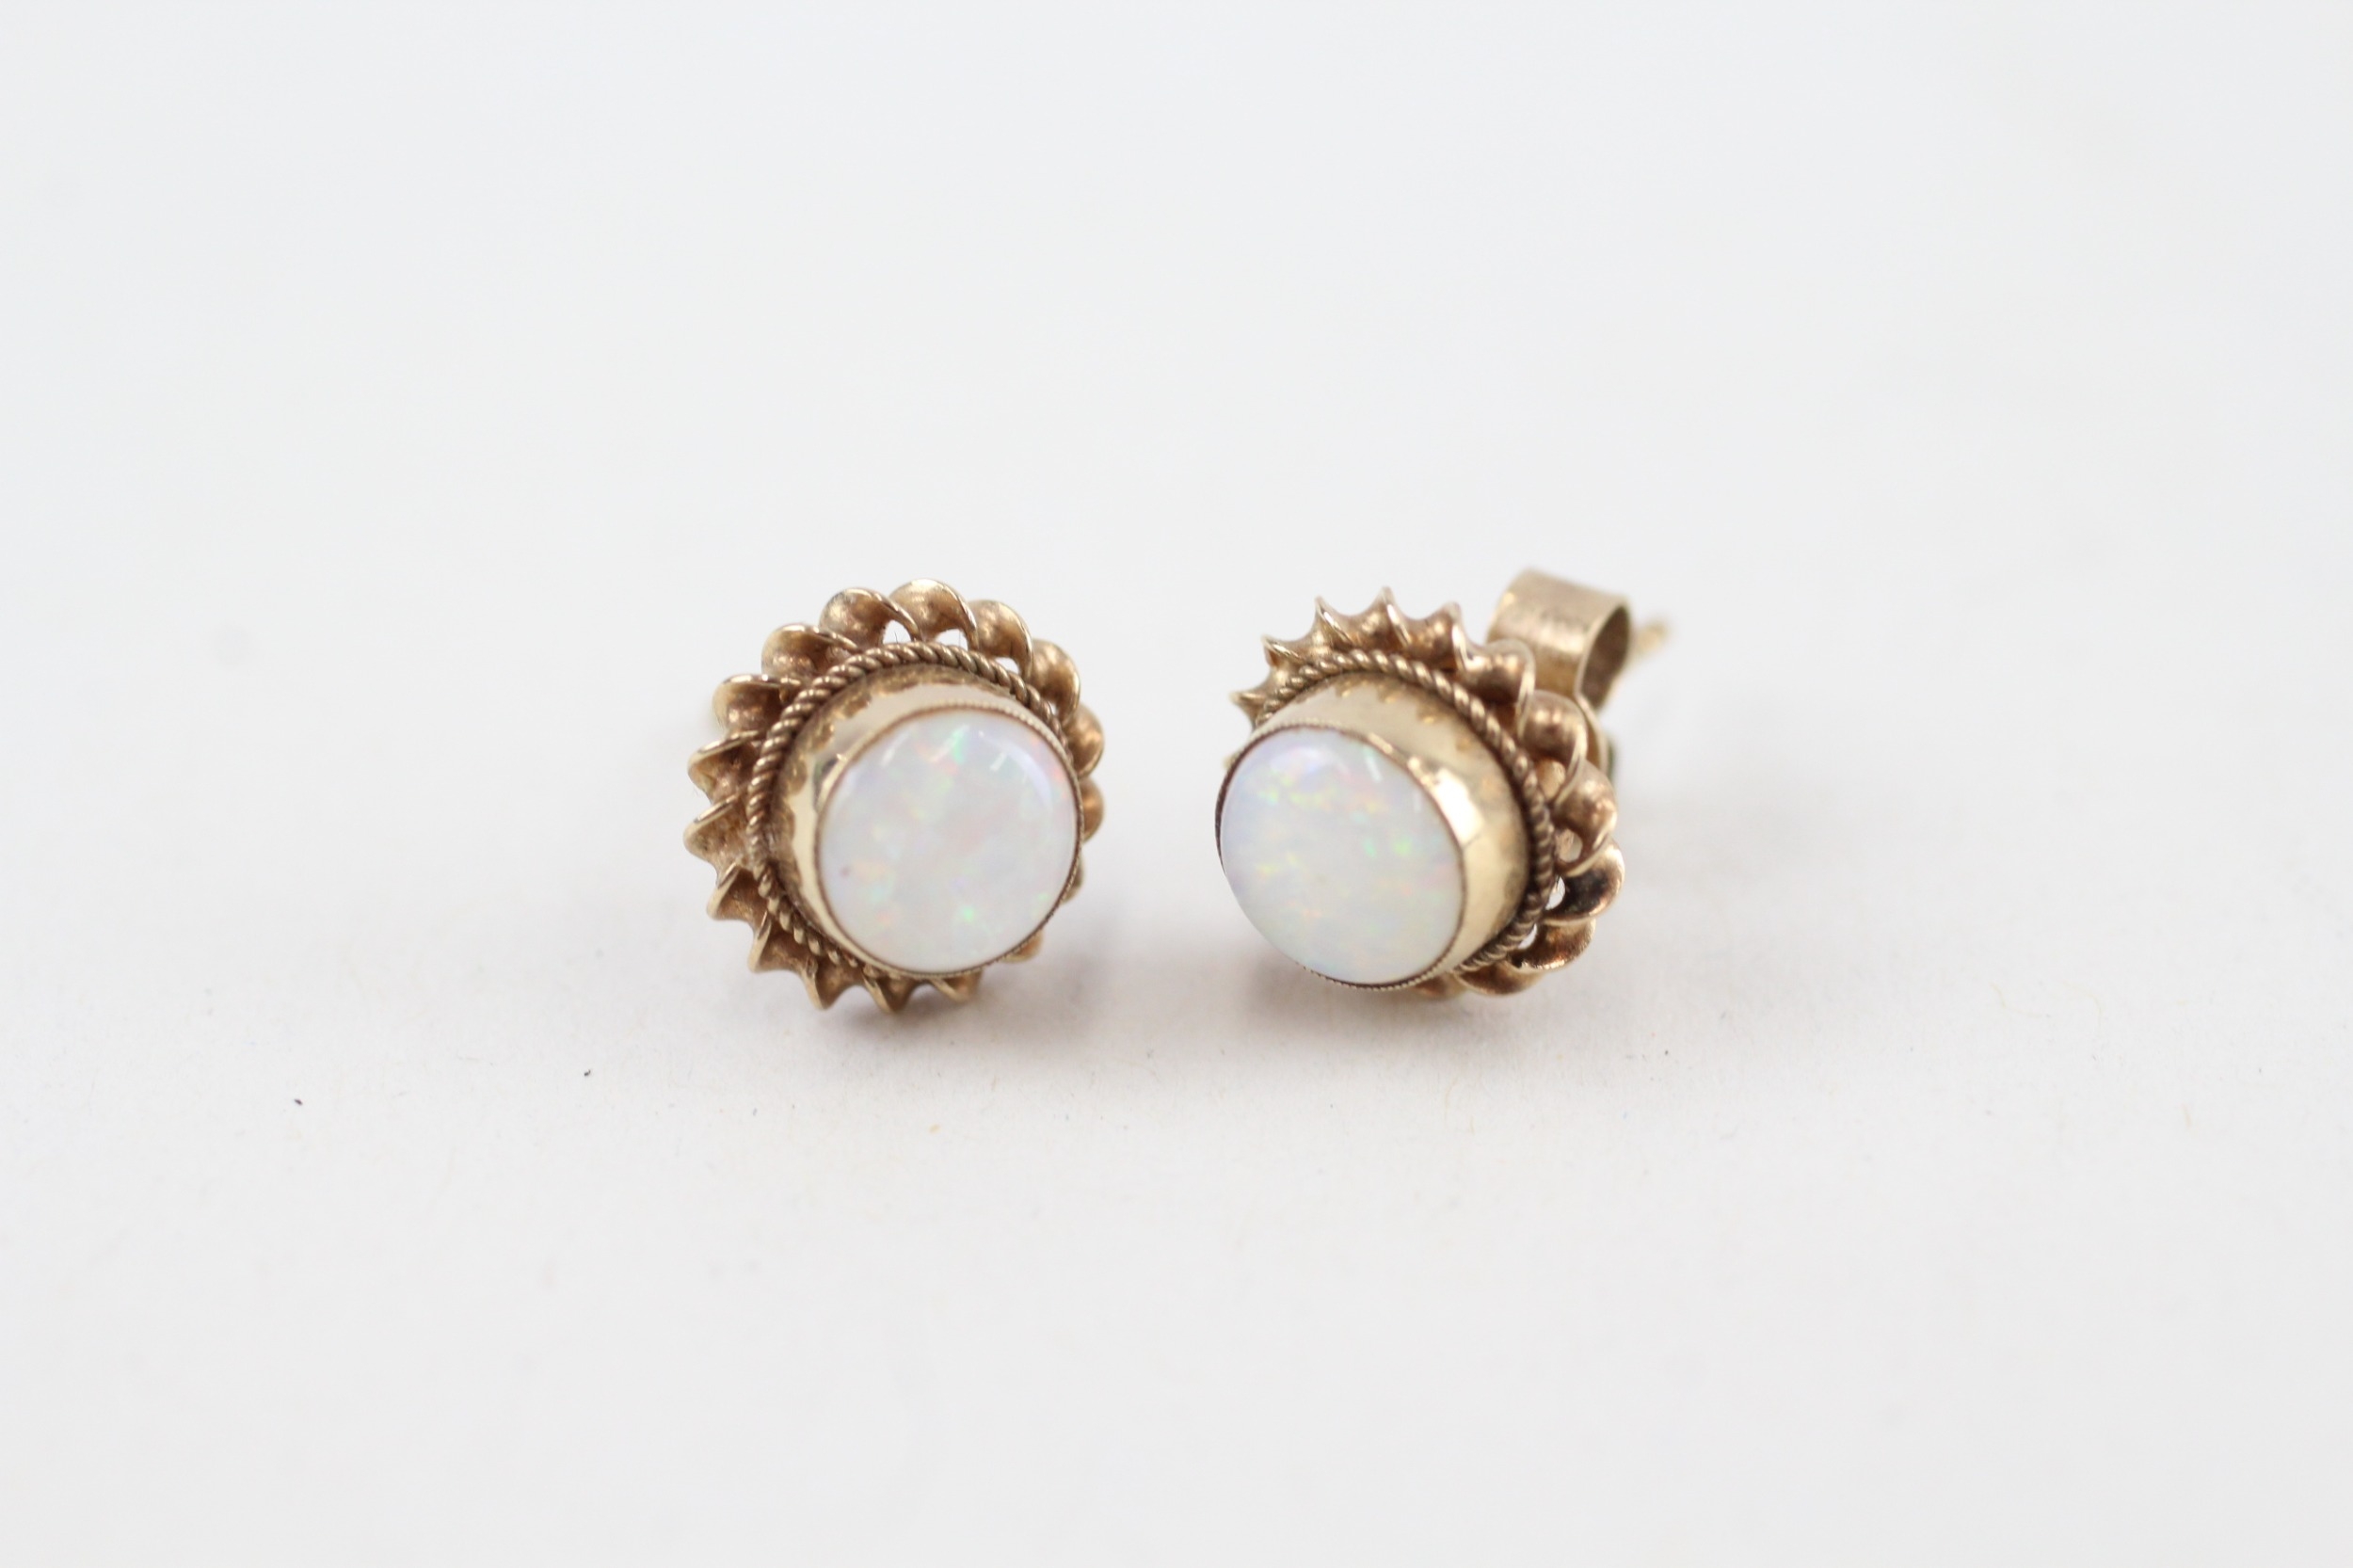 9ct gold opal stud earrings with scroll backs (1.3g)